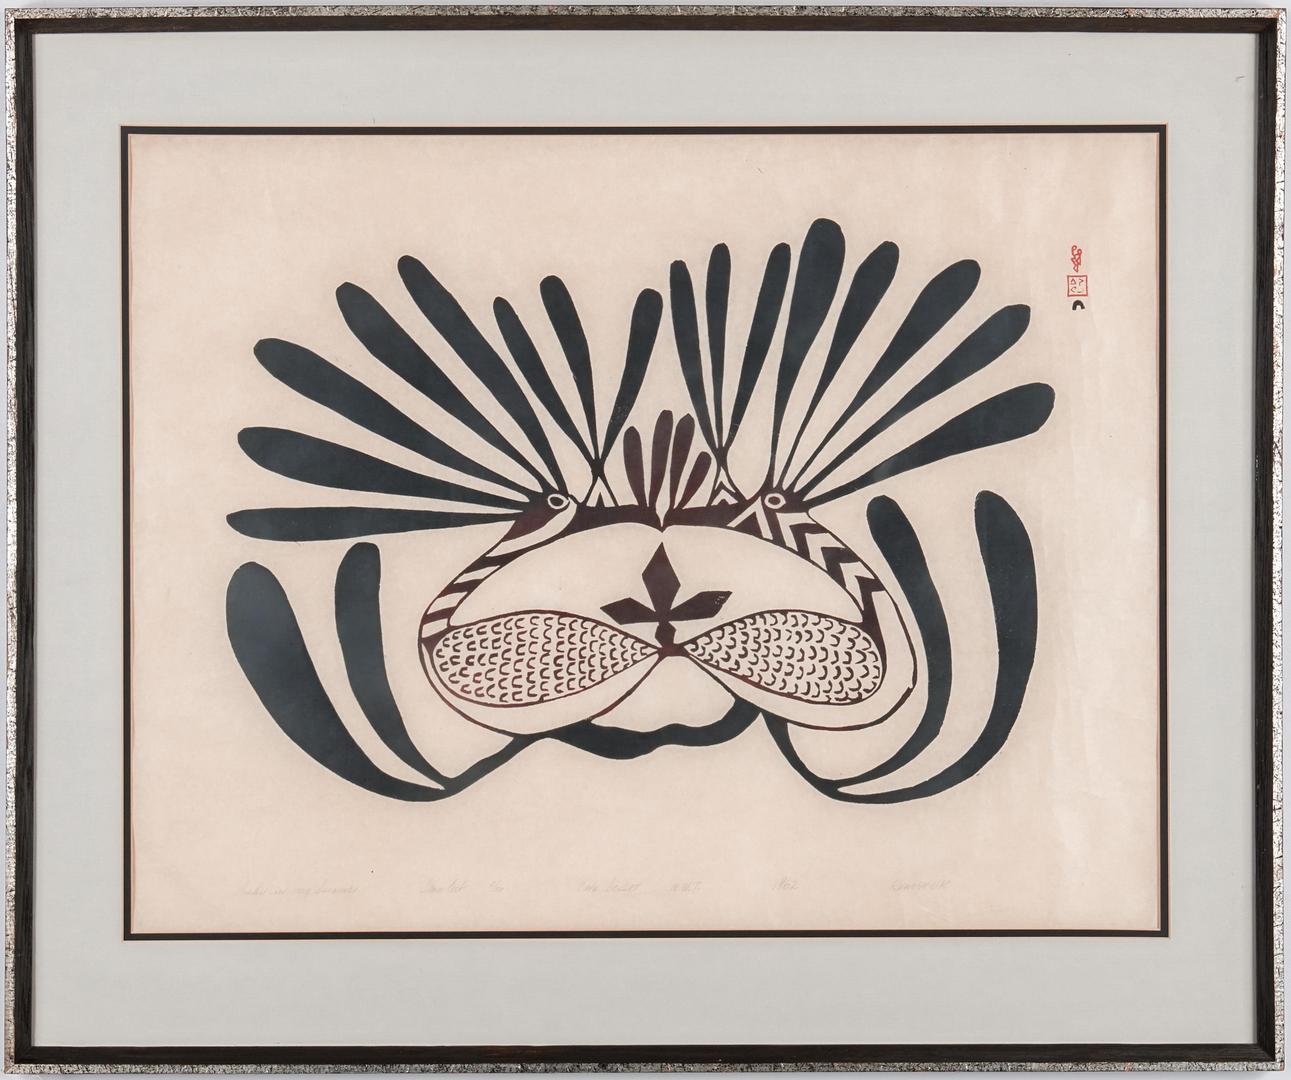 Lot 583: Inuit Print by Kenoyouk, Rudu in My Dreams